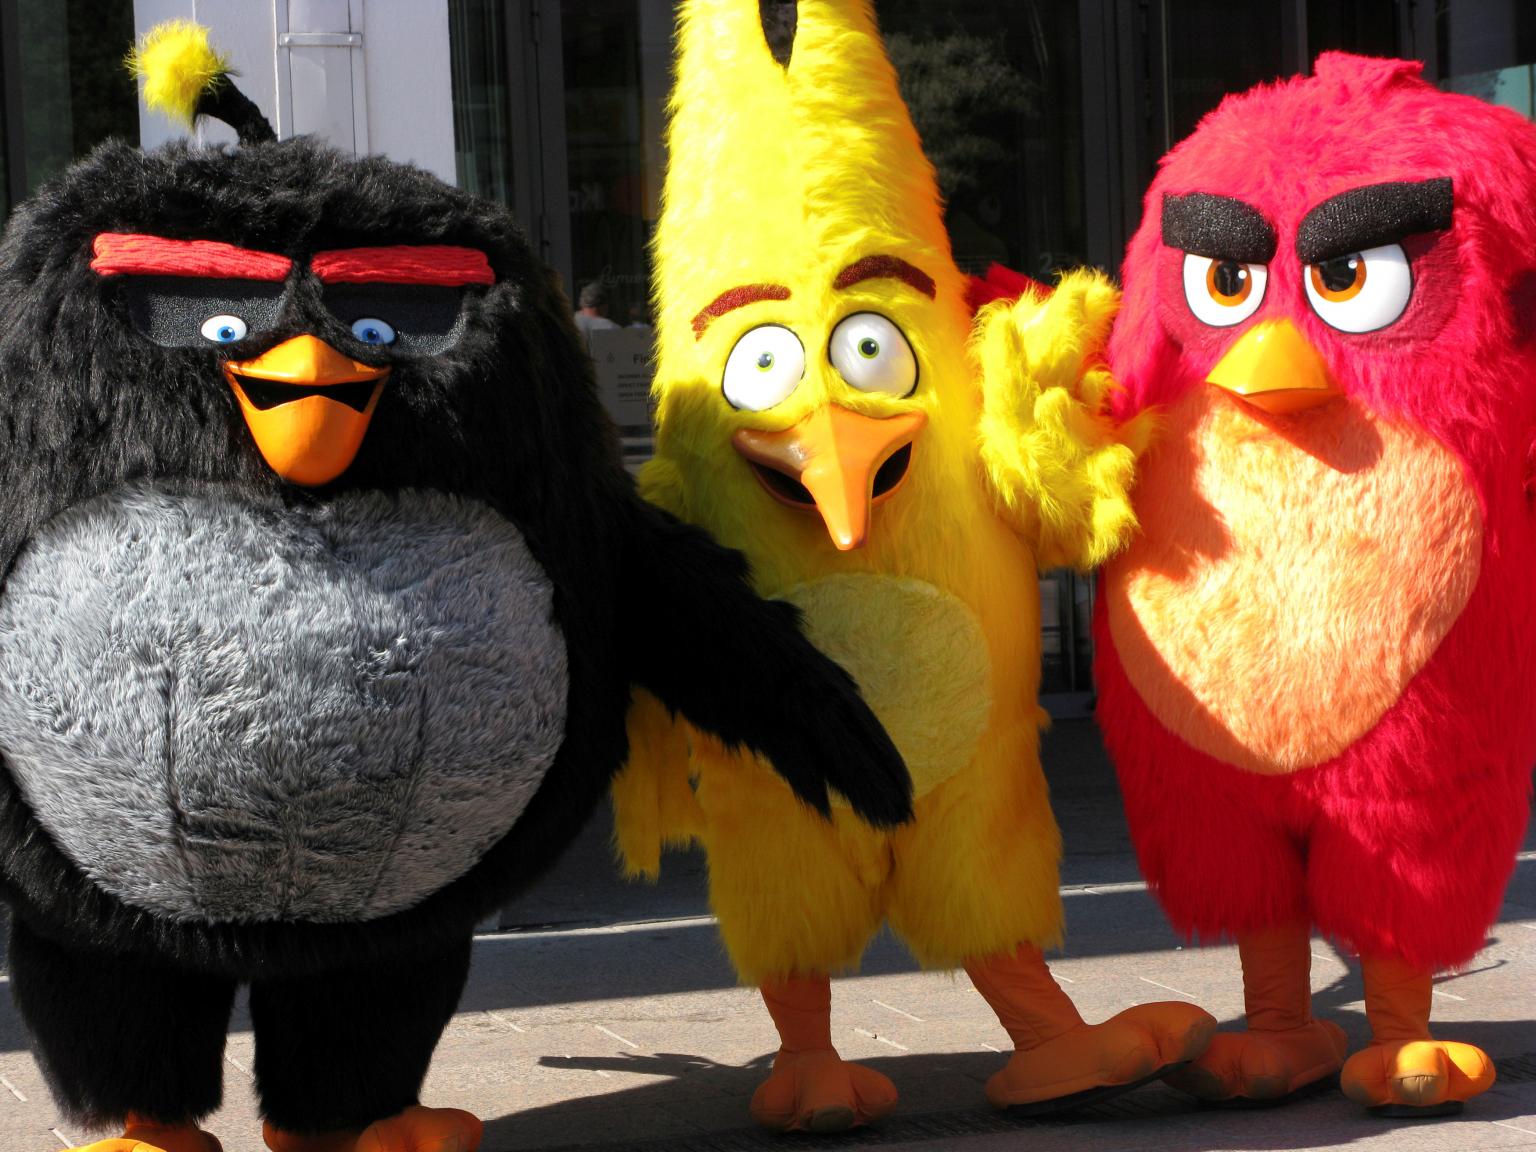 Angry Birds maker Rovio gains ground as profits rise